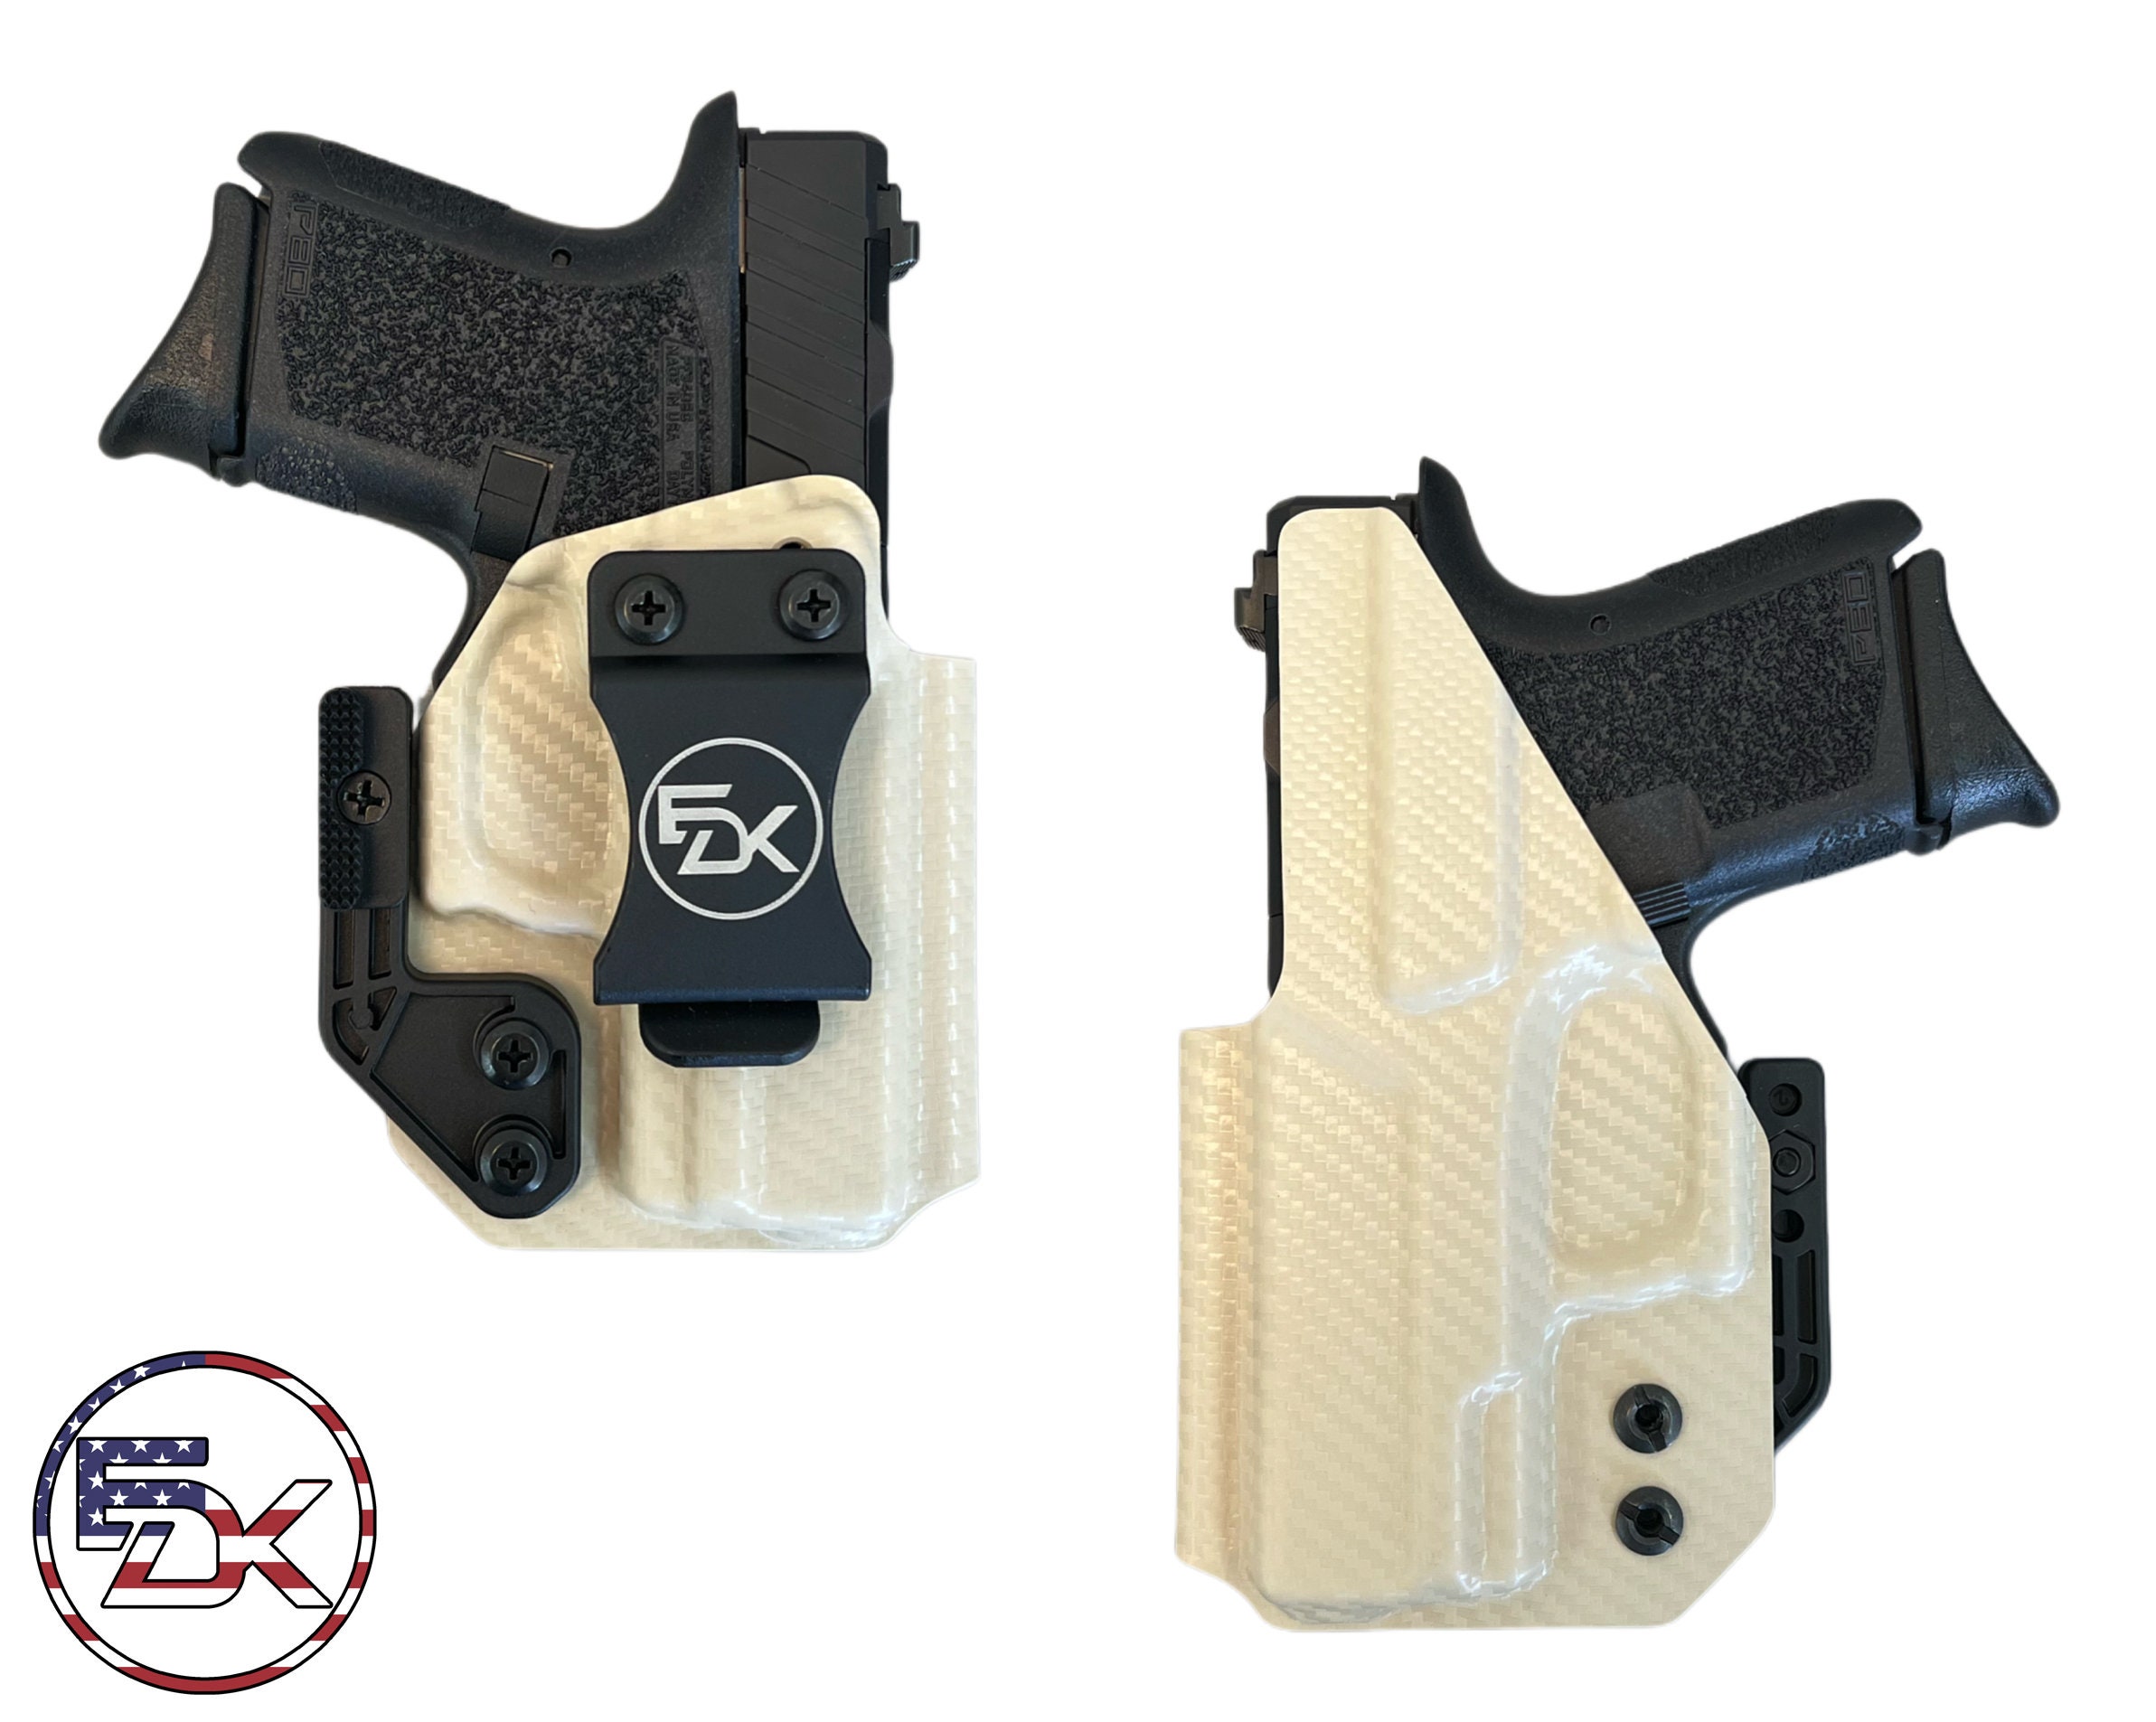 Holster port discret ambidextre - Glock 26/27 - PhilTeam – Phil Team